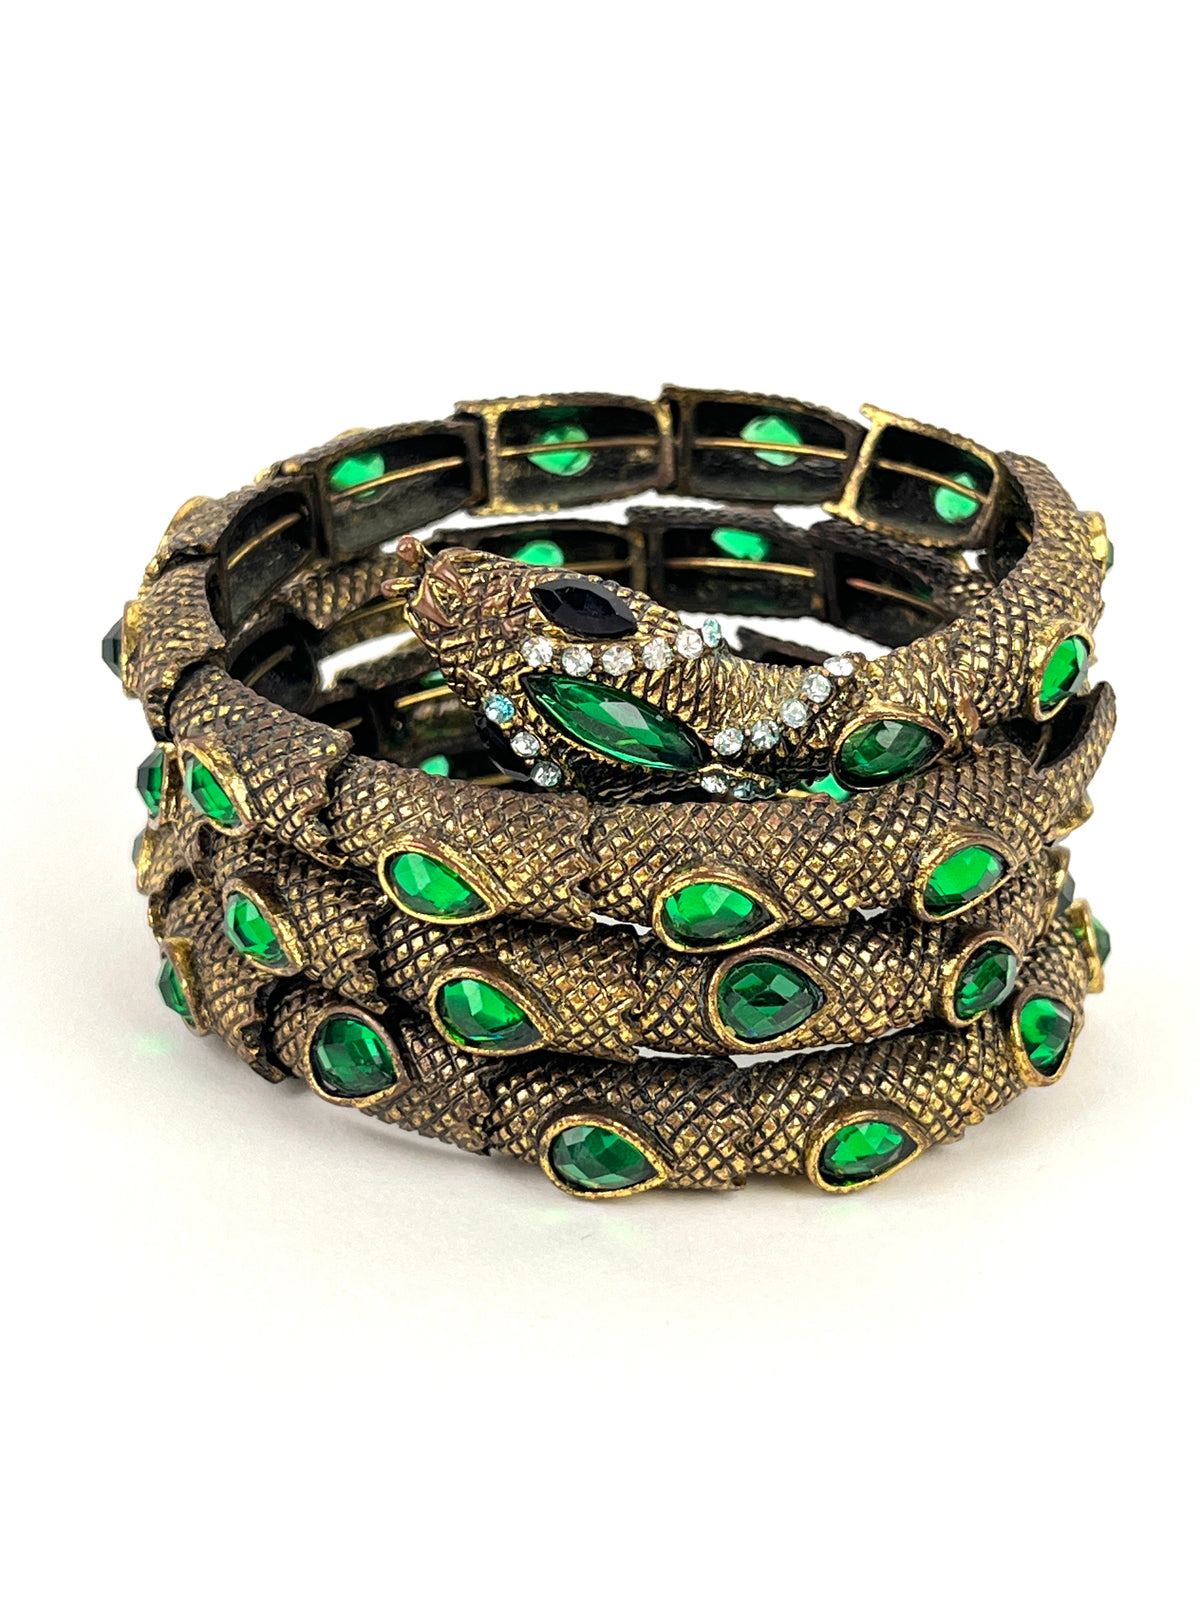 Coiled Rhinestone Snake Bracelet